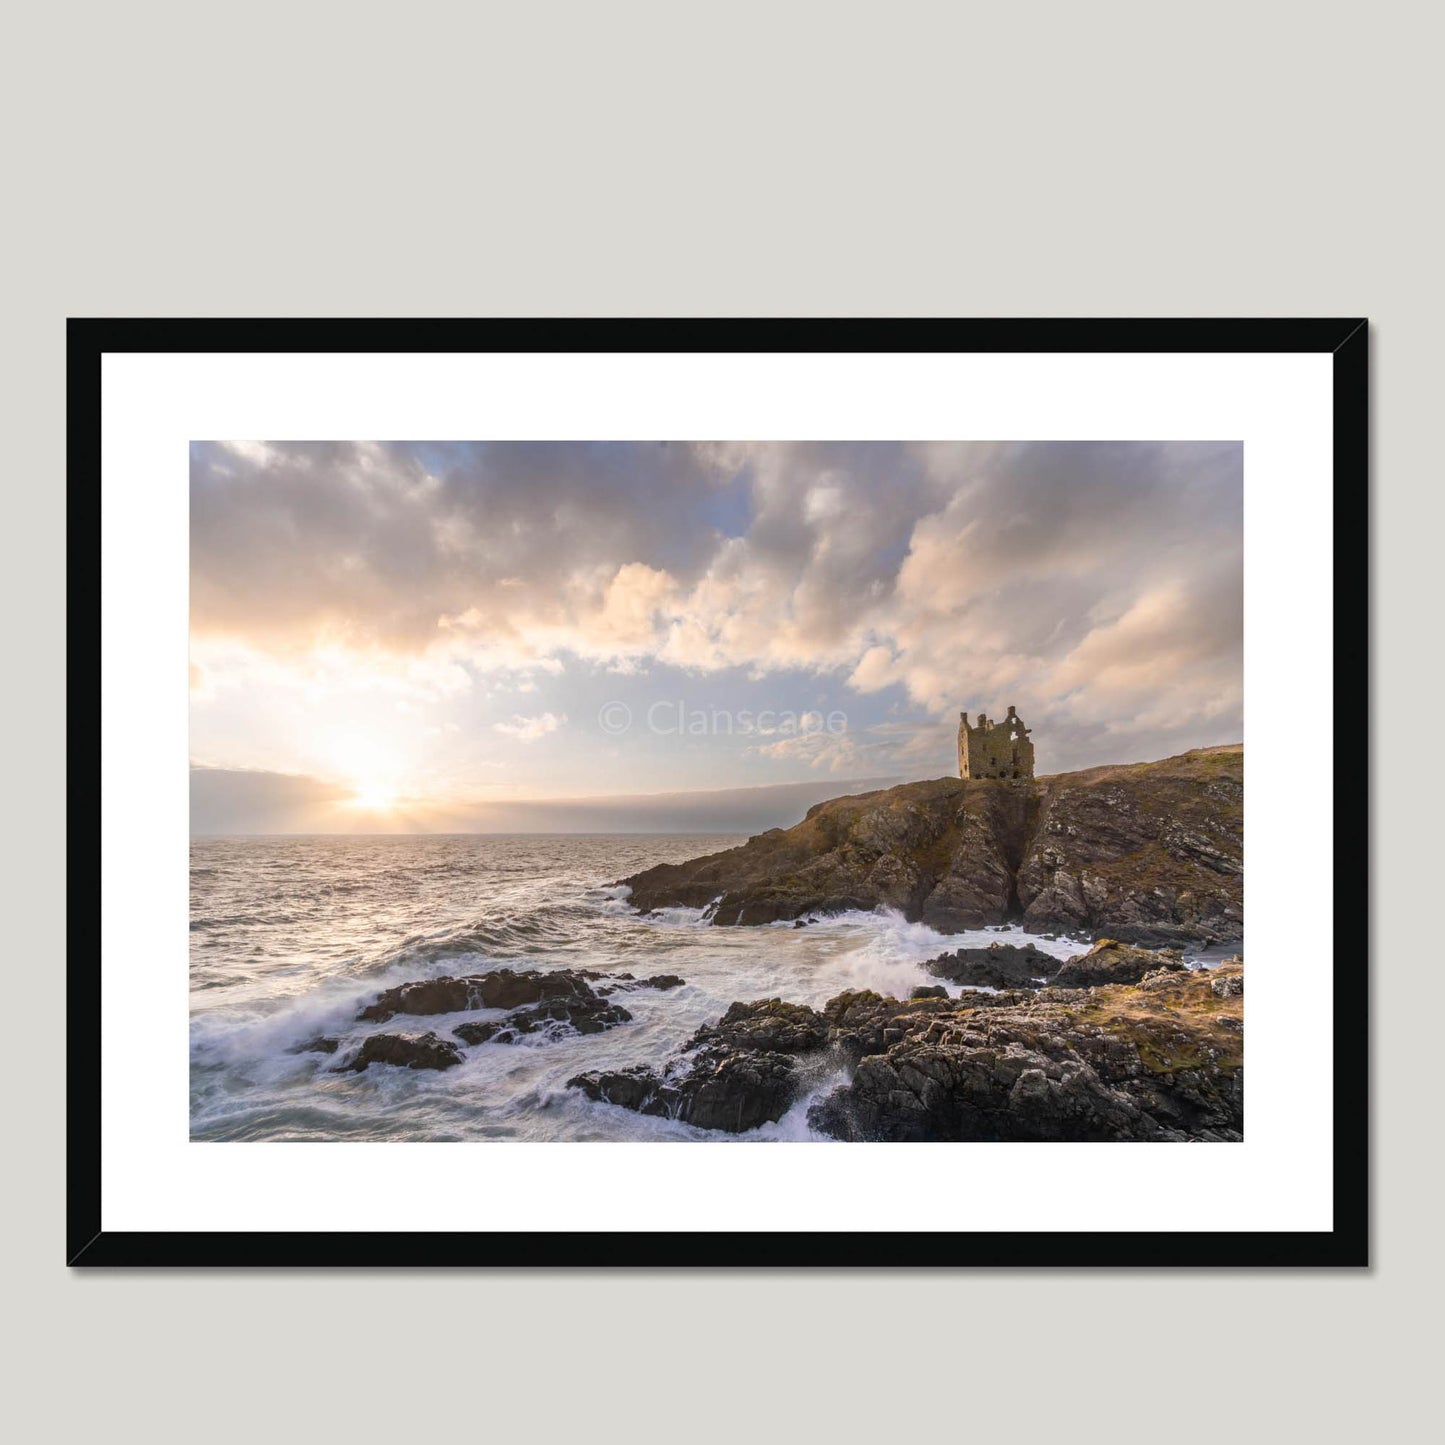 Clan Adair - Dunskey Castle - Framed & Mounted Photo Print 28"x20" Black